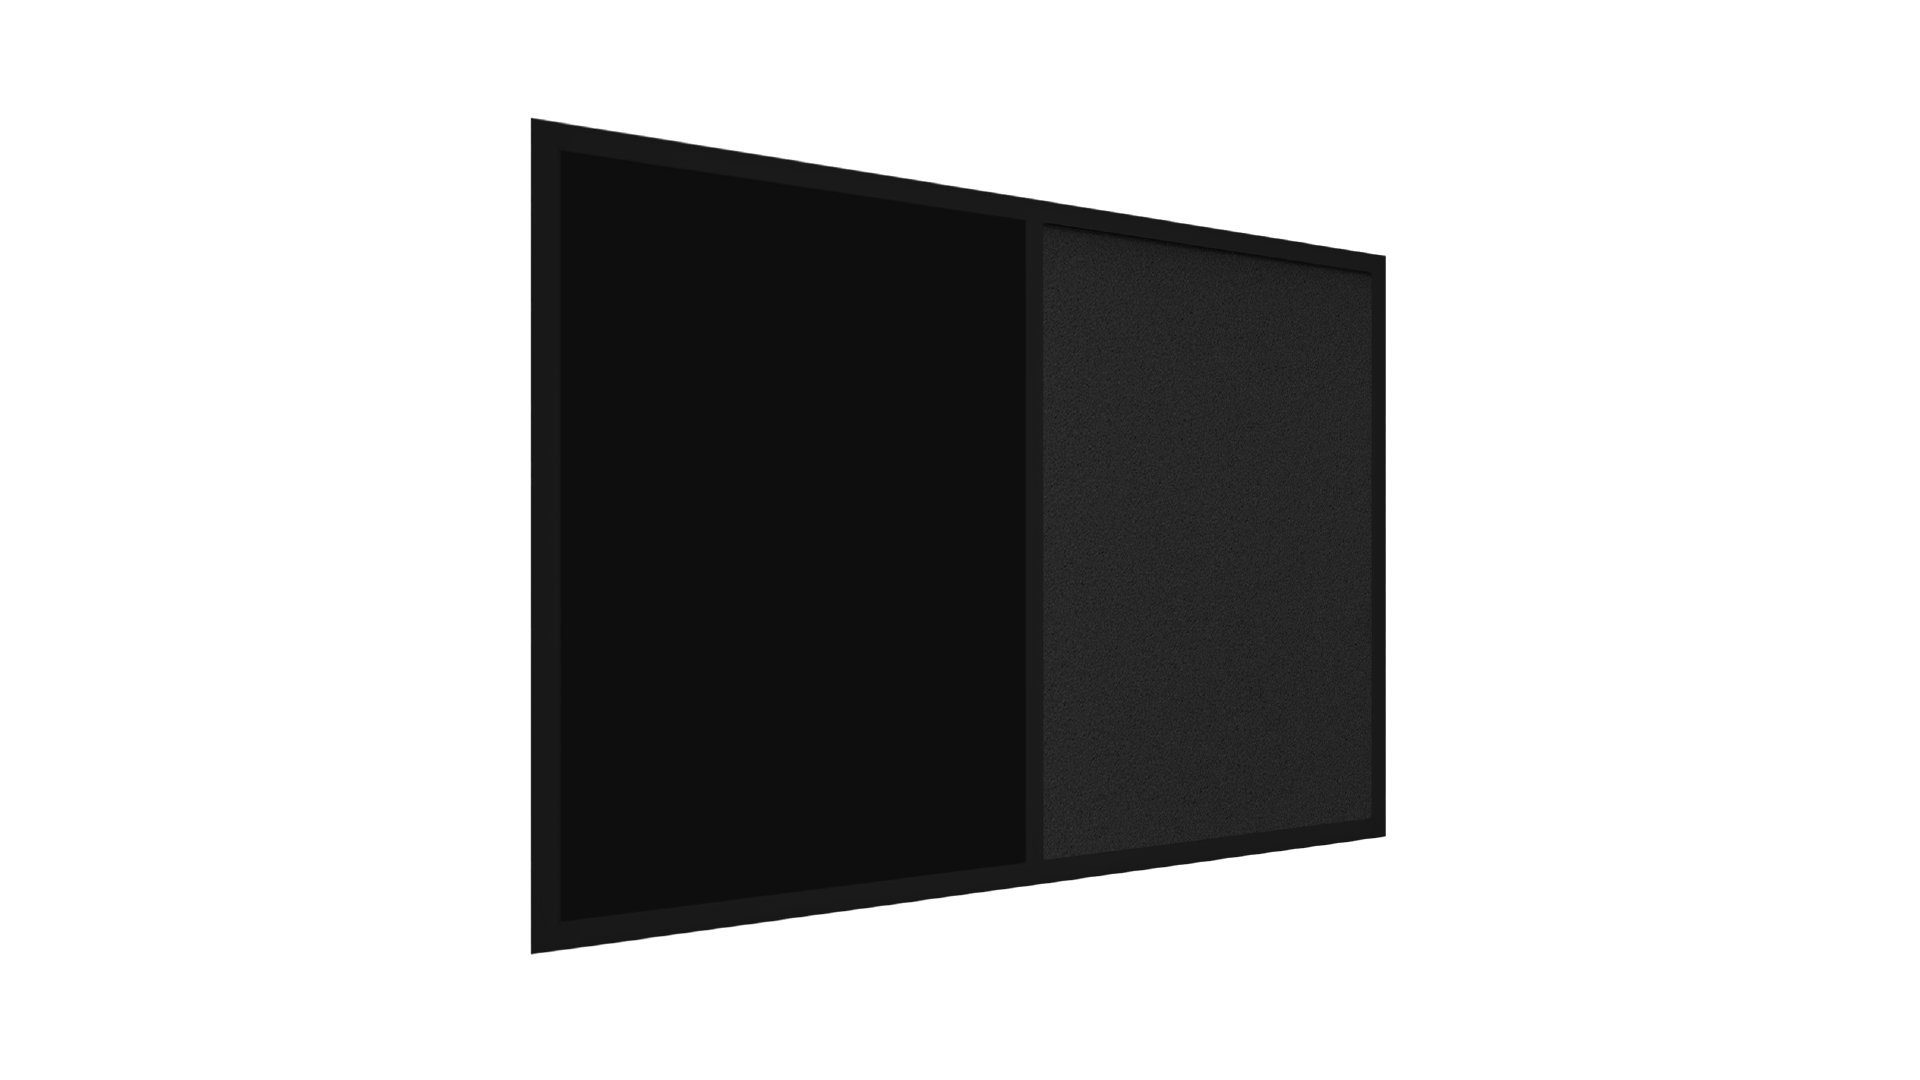 ALLboards Tafel Kombitafel Kork / schwarz magnetisch Holzrahmen schwarz lackiert